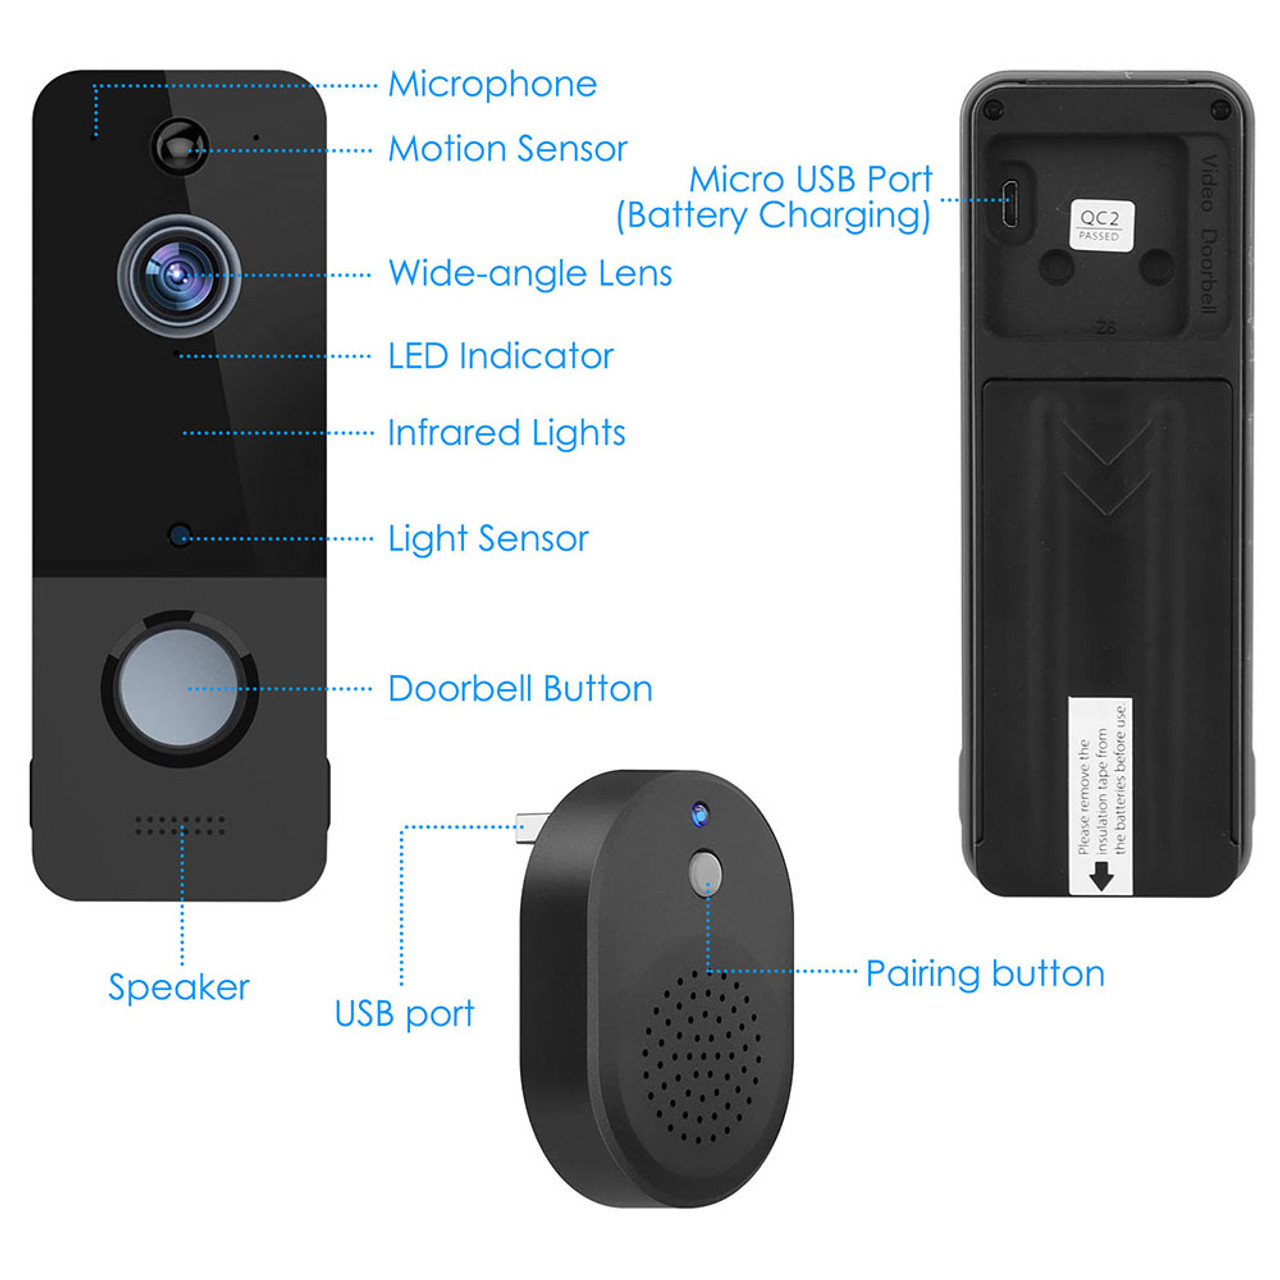 iMounTEK Smart Wi-Fi Video Doorbell  product image